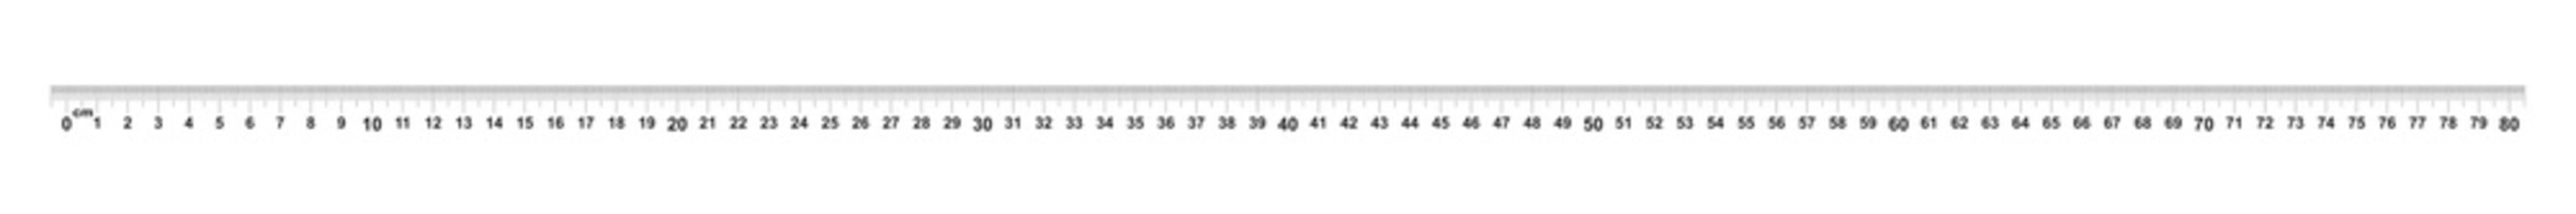 Ruler 80 centimeter. Ruler 800 mm. Value of division 0.5 mm. Precise length measurement device. Calibration grid.